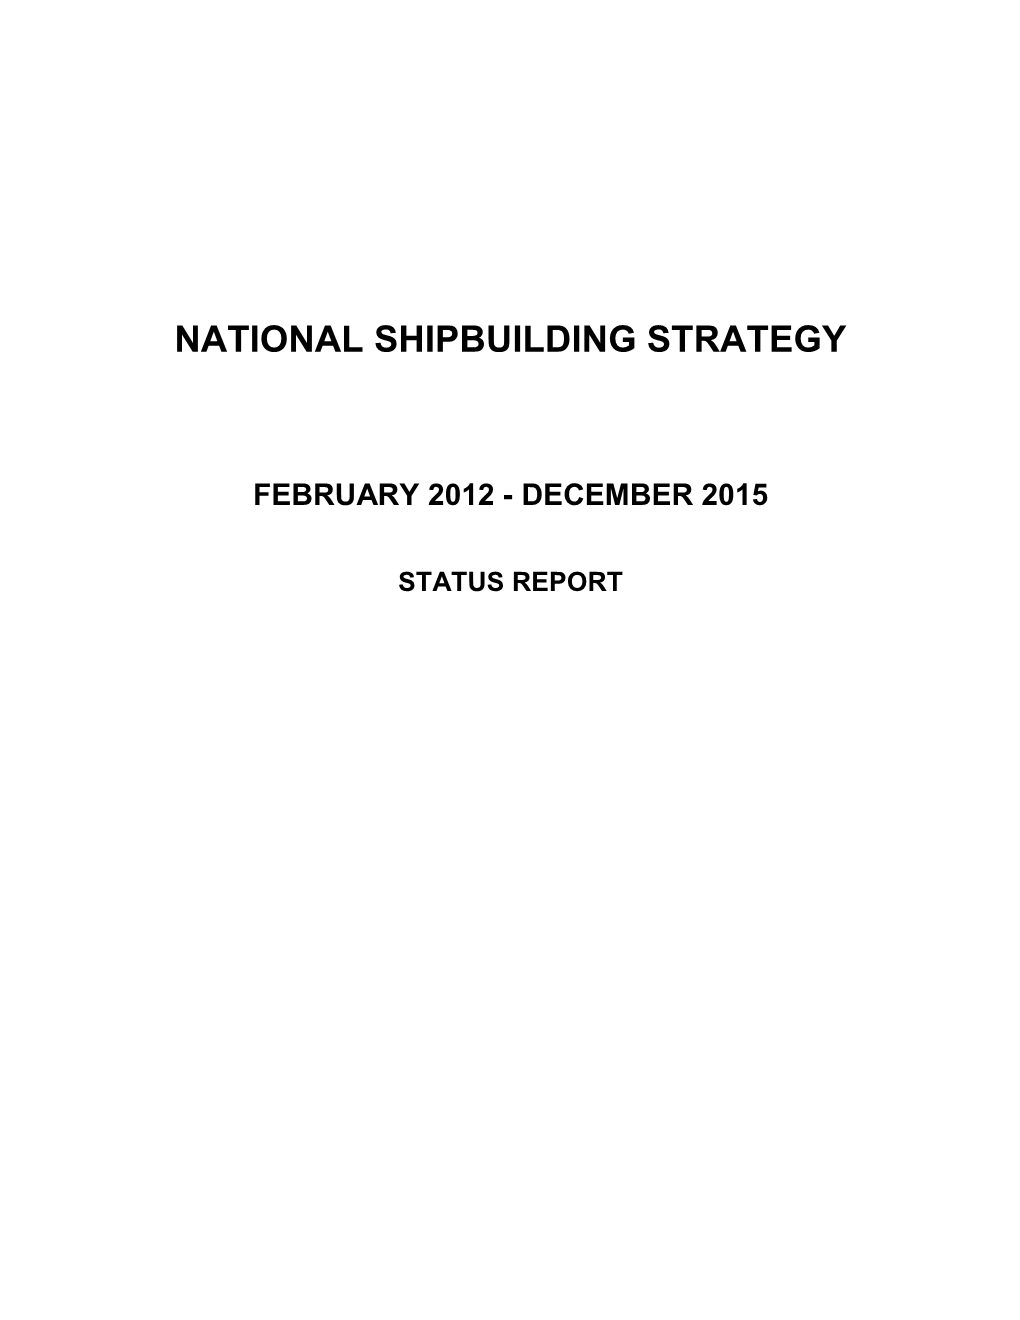 National Shipbuilding Strategy